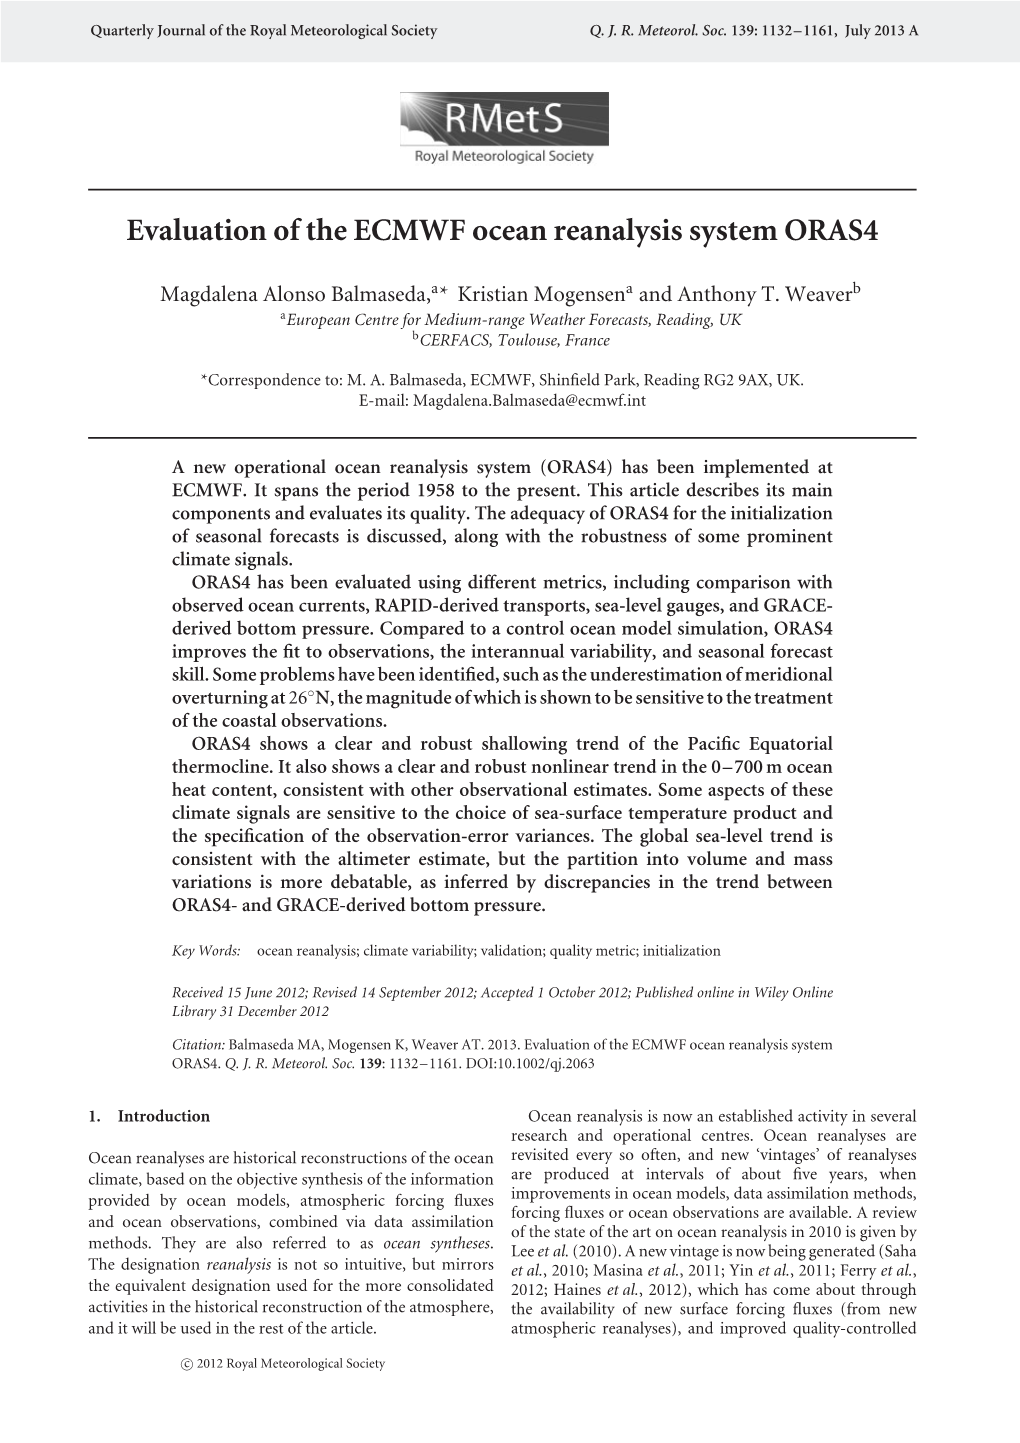 Evaluation of the ECMWF Ocean Reanalysis System ORAS4